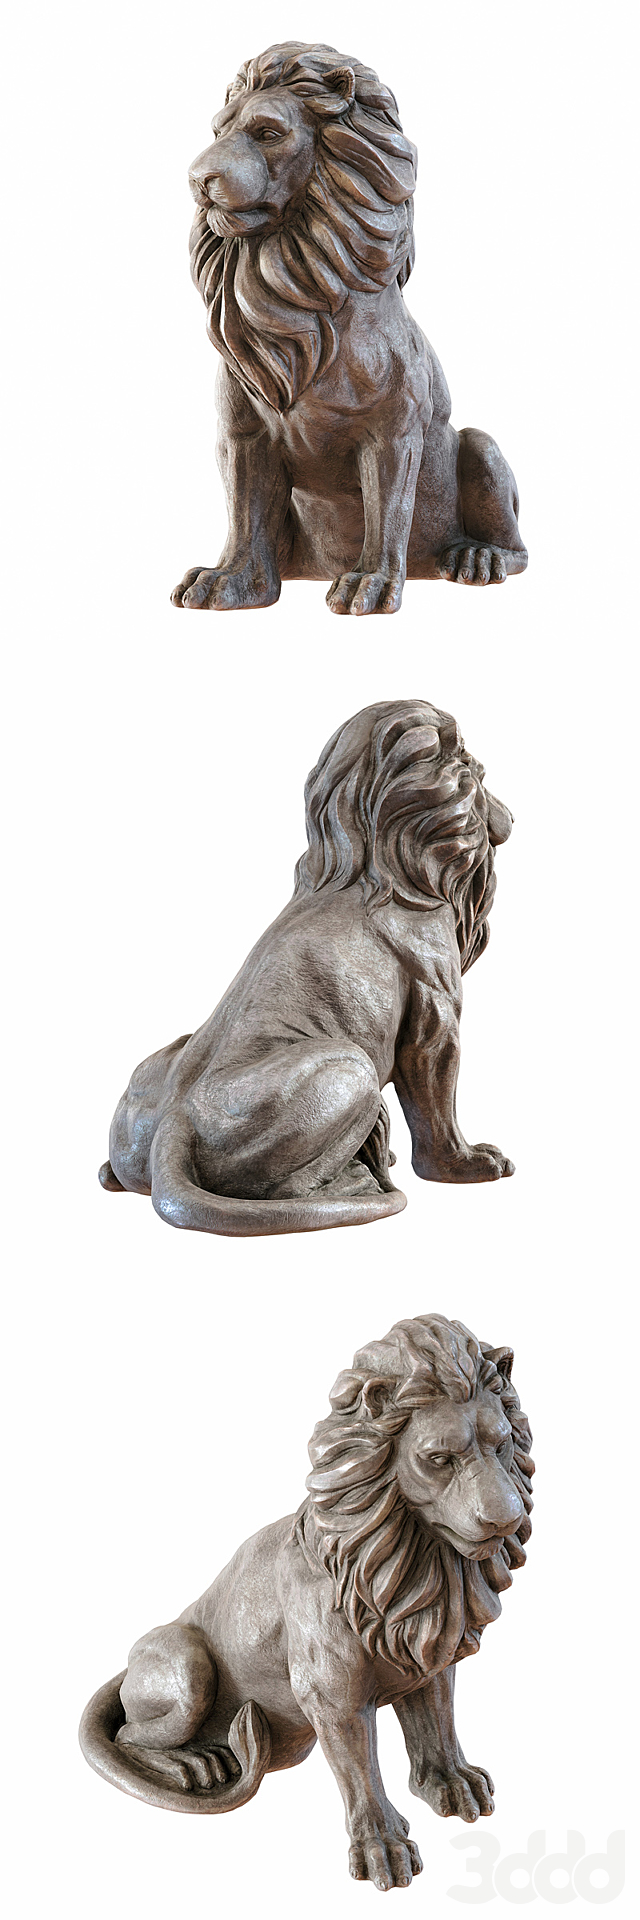 
                                                                                                            Скульптура Льва
                                                    